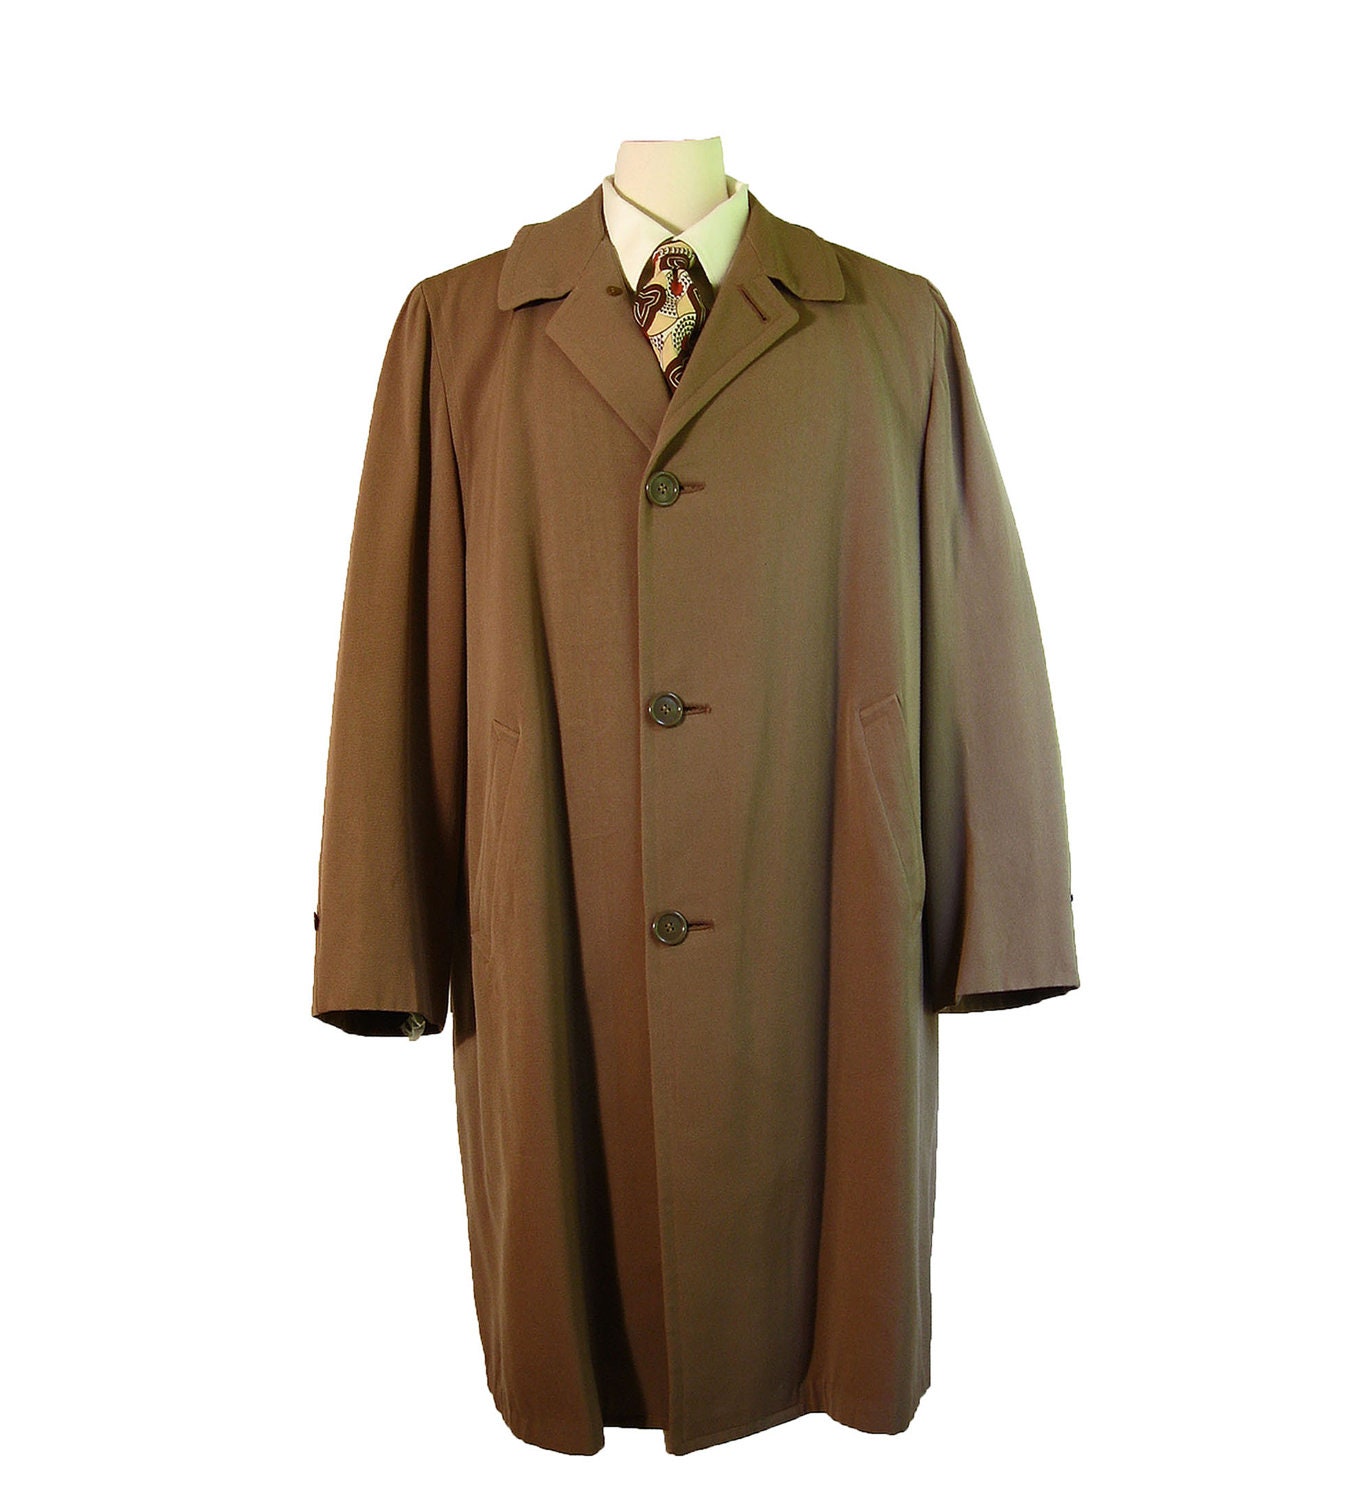 1950s Vintage Mens Top Coat Overcoat by SEASON by EndlessAlley